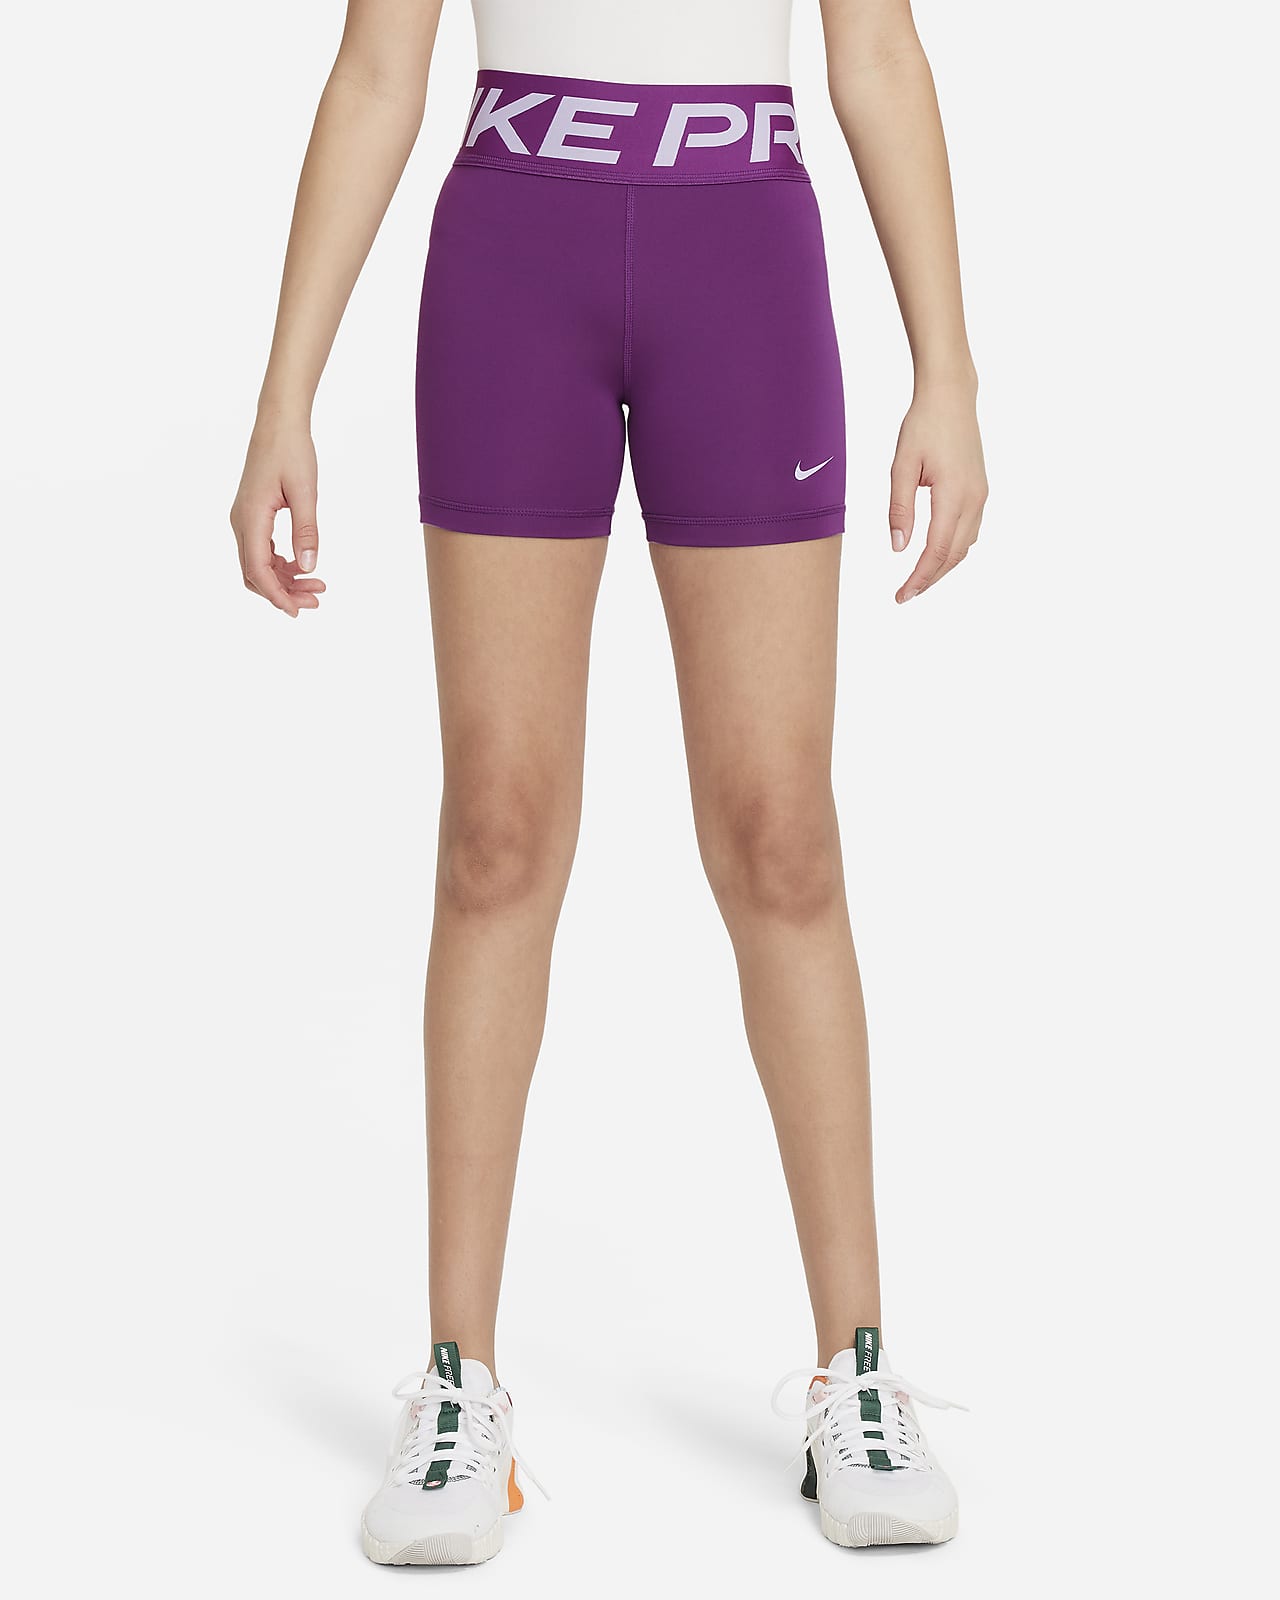 Nike Dri-fit Pro 3-inch Camo Print legging Shorts in Gray